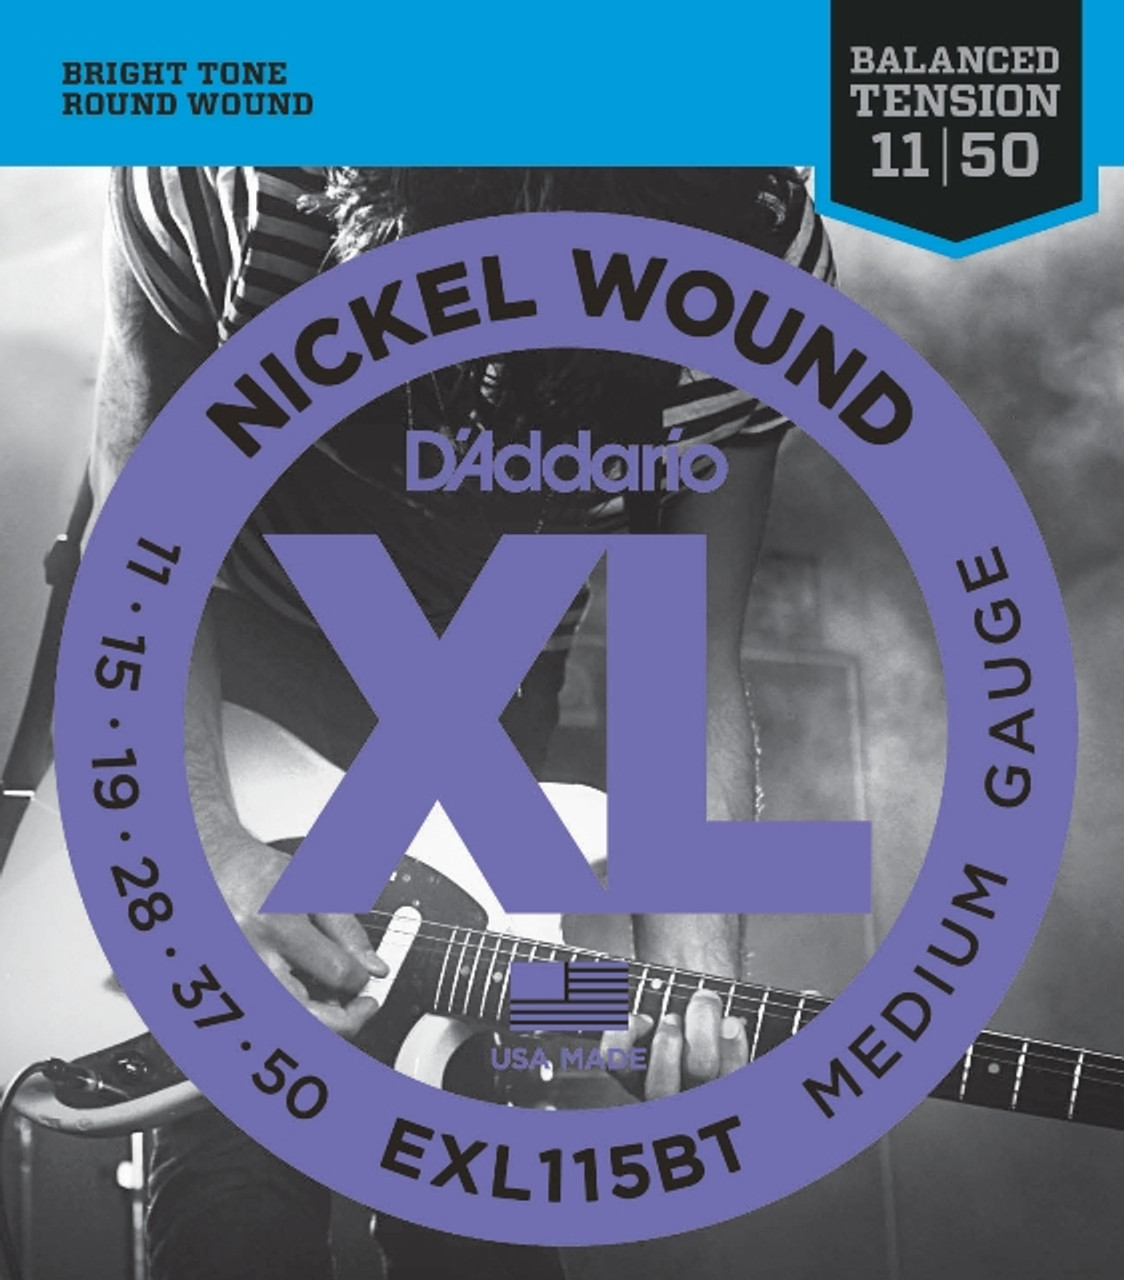 D'Addario EXL115BT Nickel Wound Electric Guitar Strings, Balanced Tension Medium, 11-50